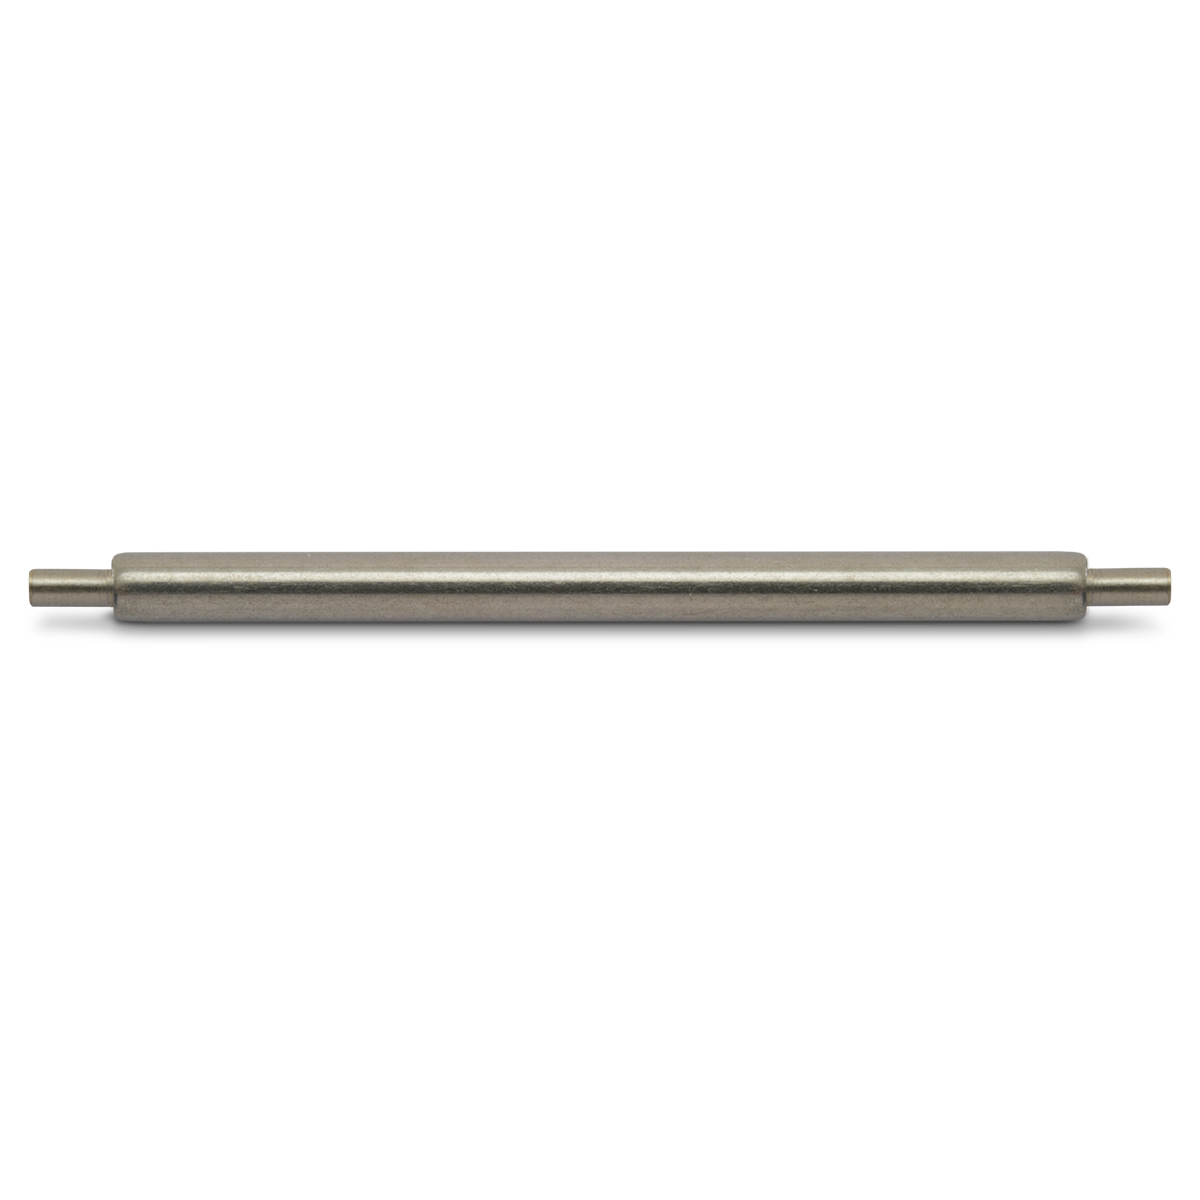 100 Barrettes en acier inox, sans ergots, tuyau Ø 1,0 mm, pivot Ø 0,6 mm, longueur 16 mm,  extra fin